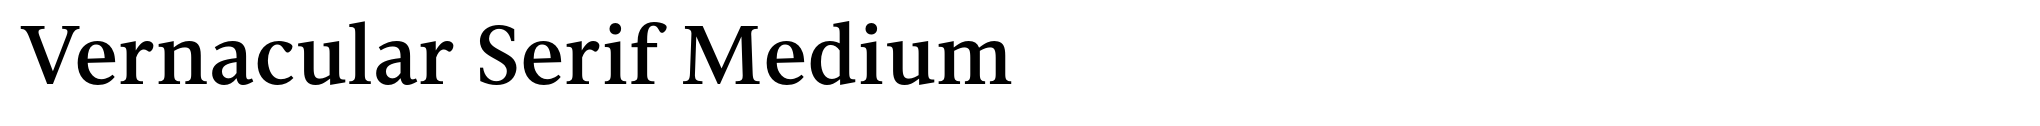 Vernacular Serif Medium image